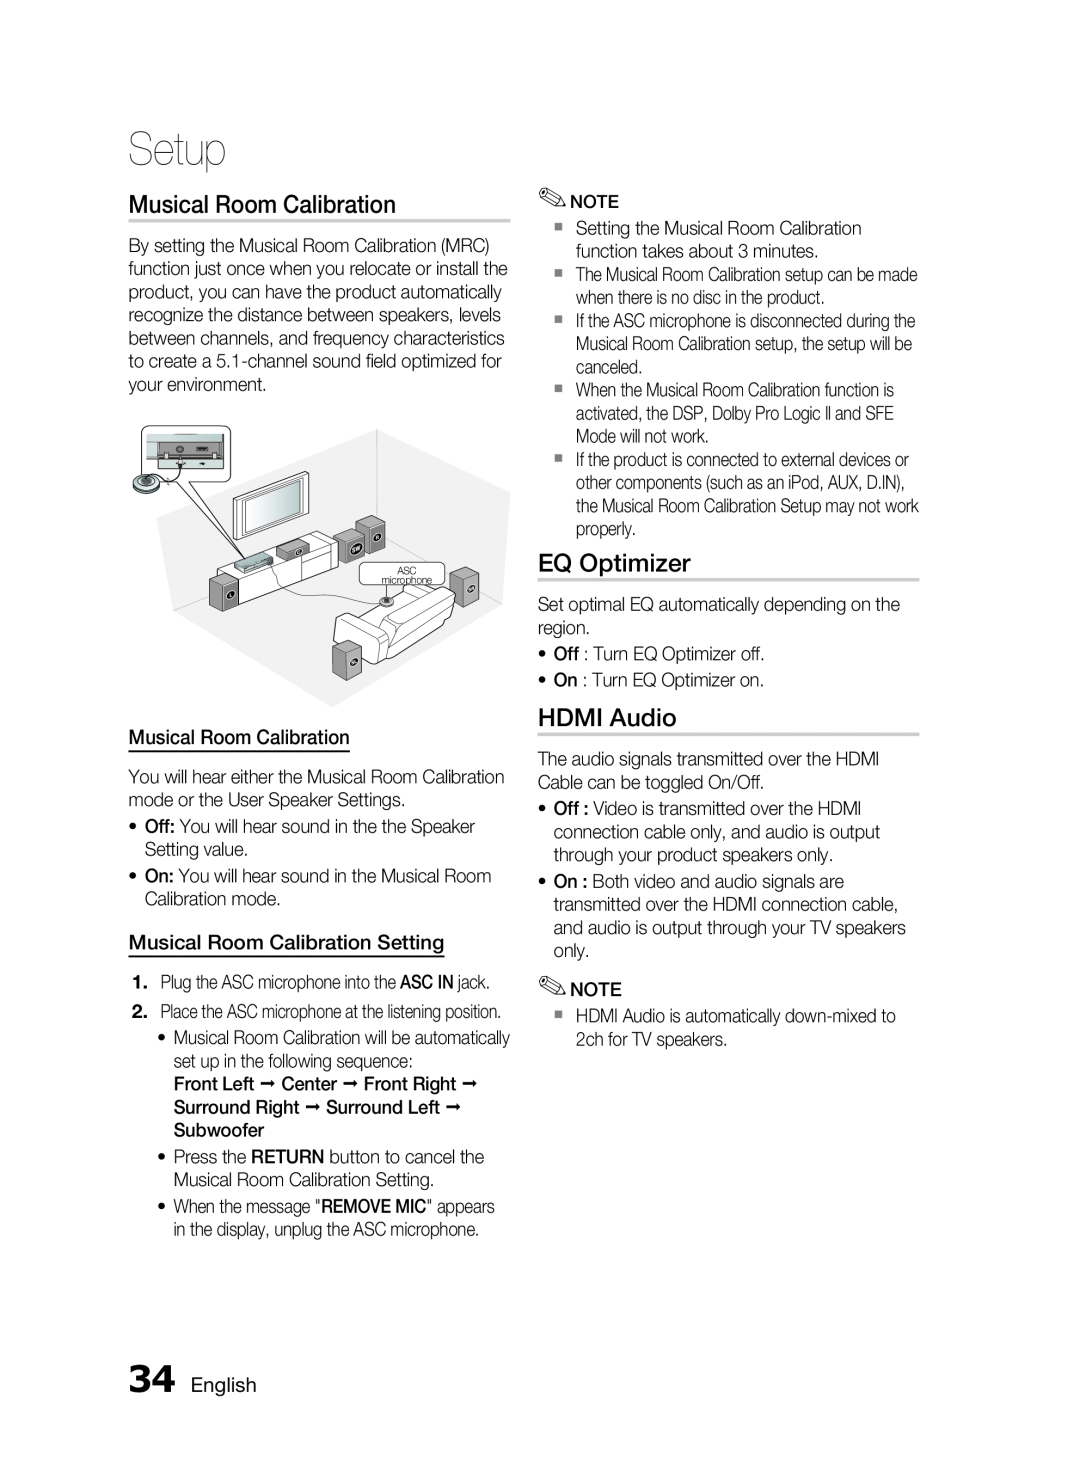 Samsung AH68-02255S, HT-C6530 user manual EQ Optimizer, HDMI Audio, Musical Room Calibration Setting, English, Setup 